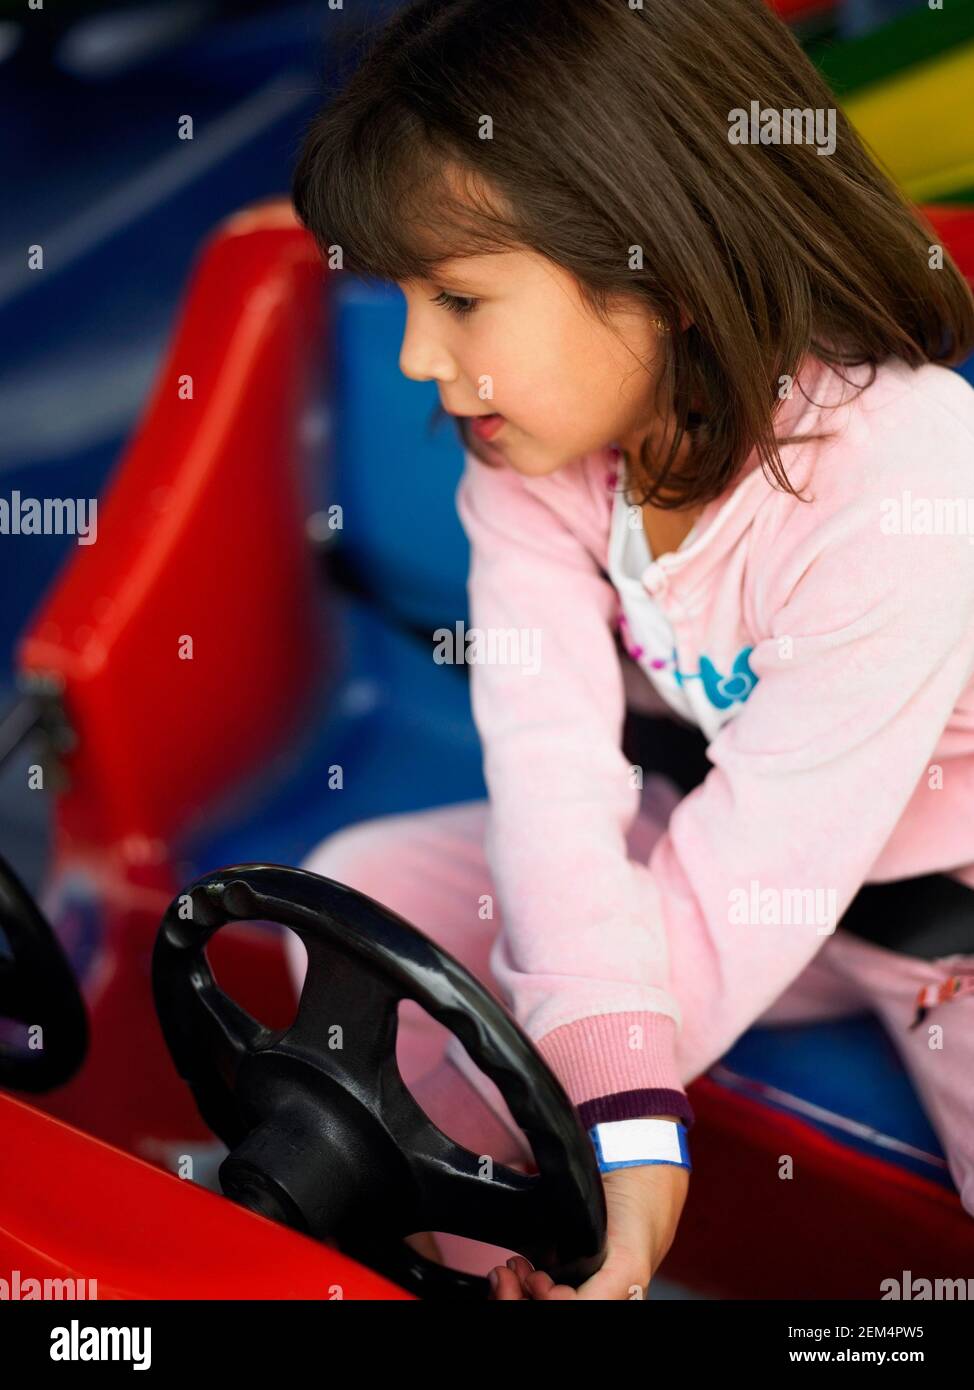 High angle view of a girl riding a bumper car Stock Photo